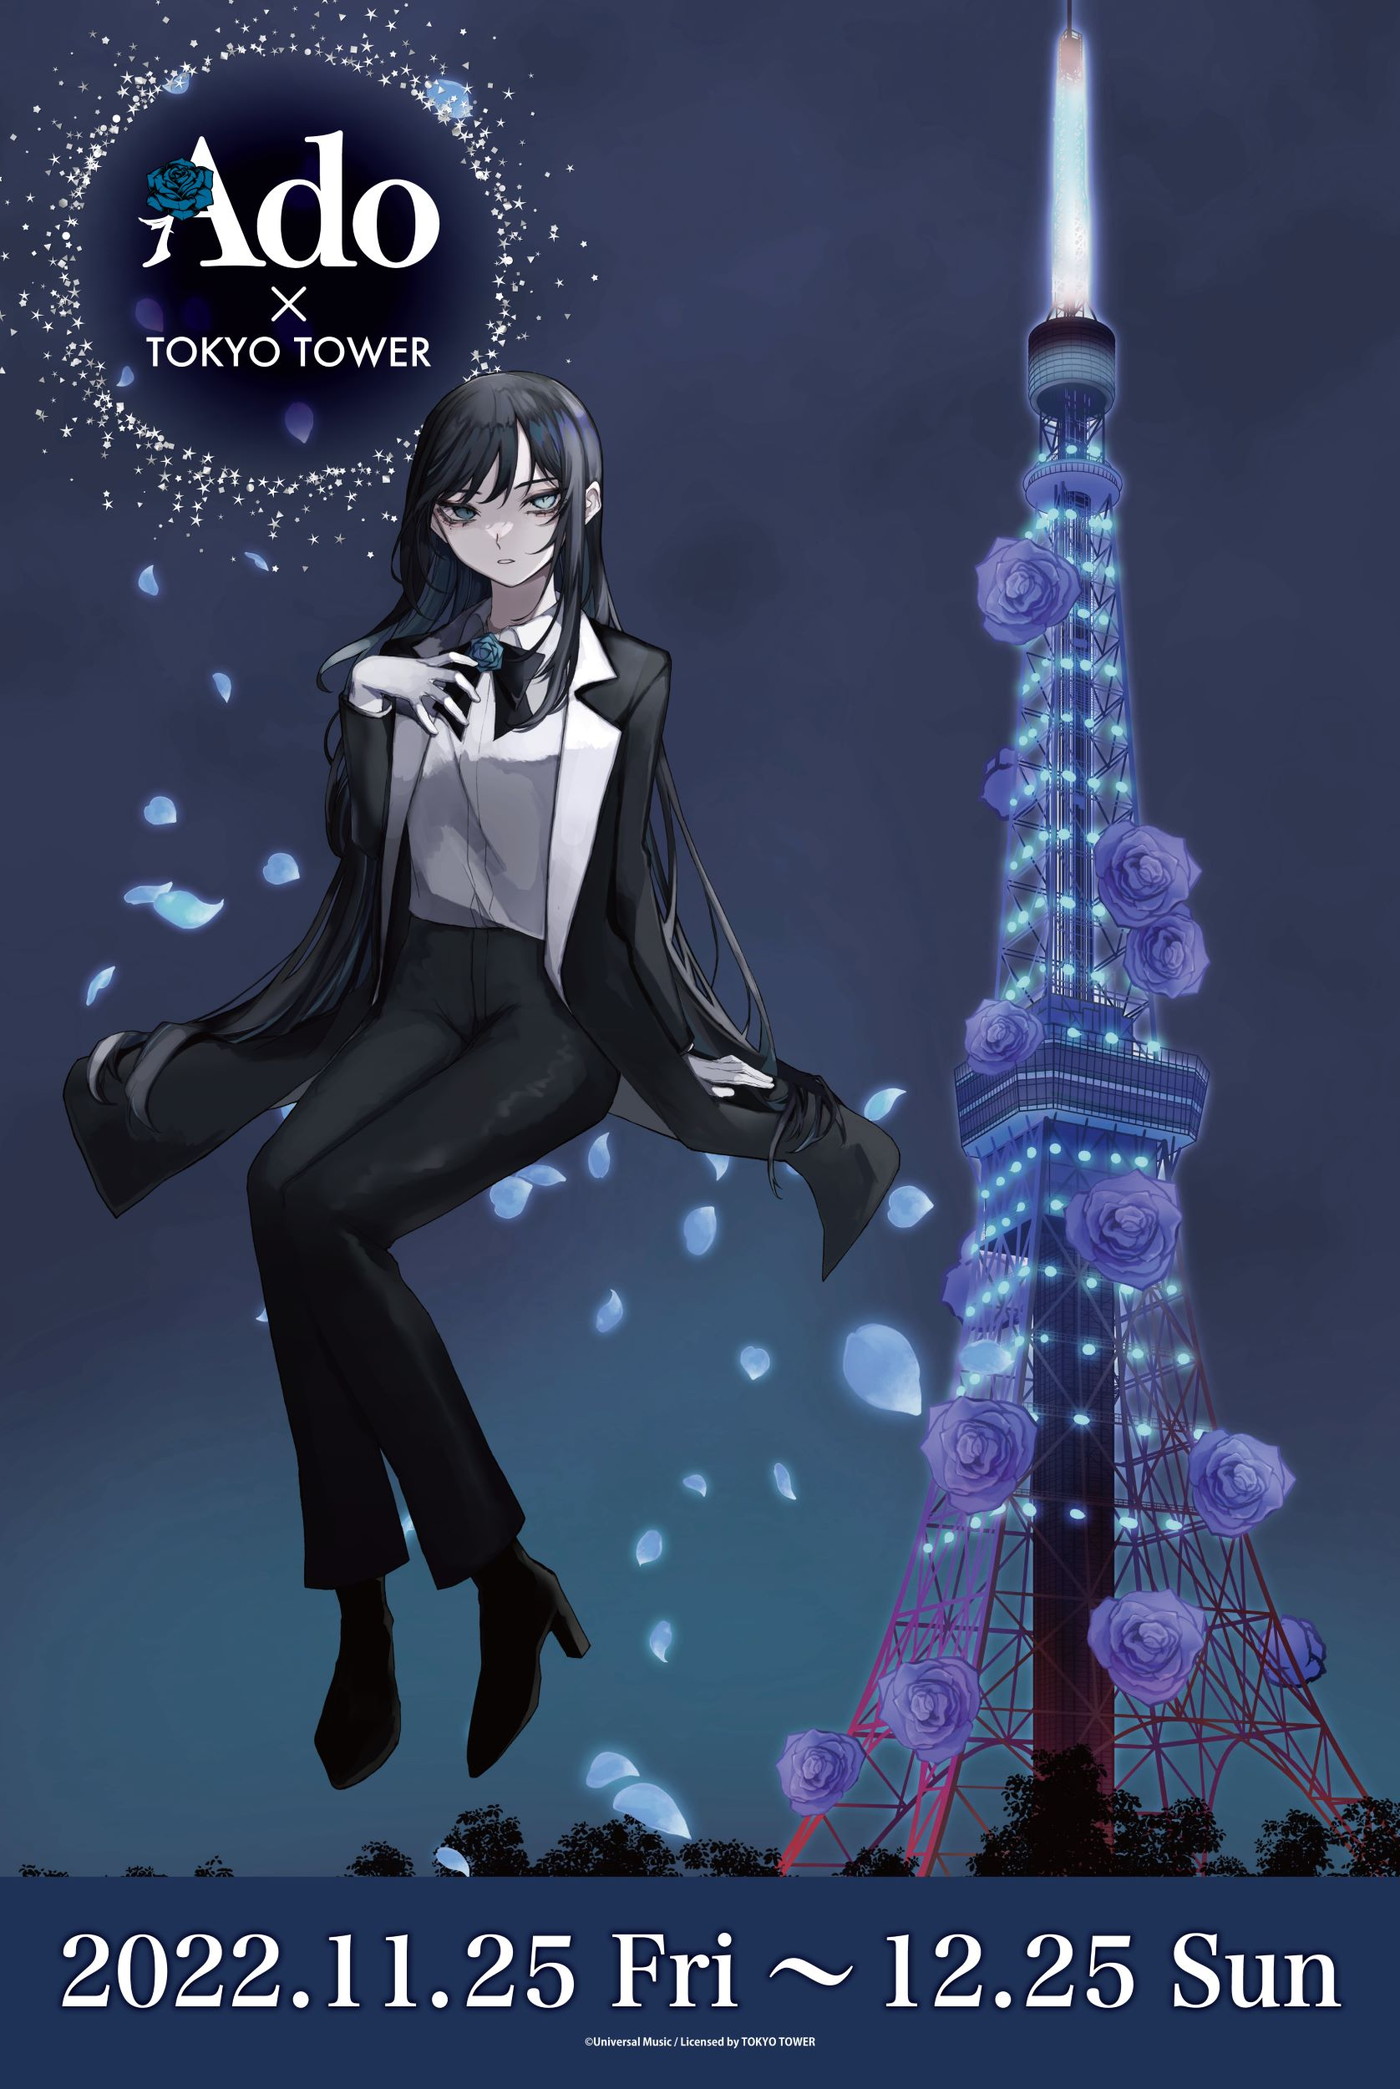 Adoのメジャーデビュー2周年を記念し、東京タワーで『Ado×TOKYO TOWER』が期間限定開催